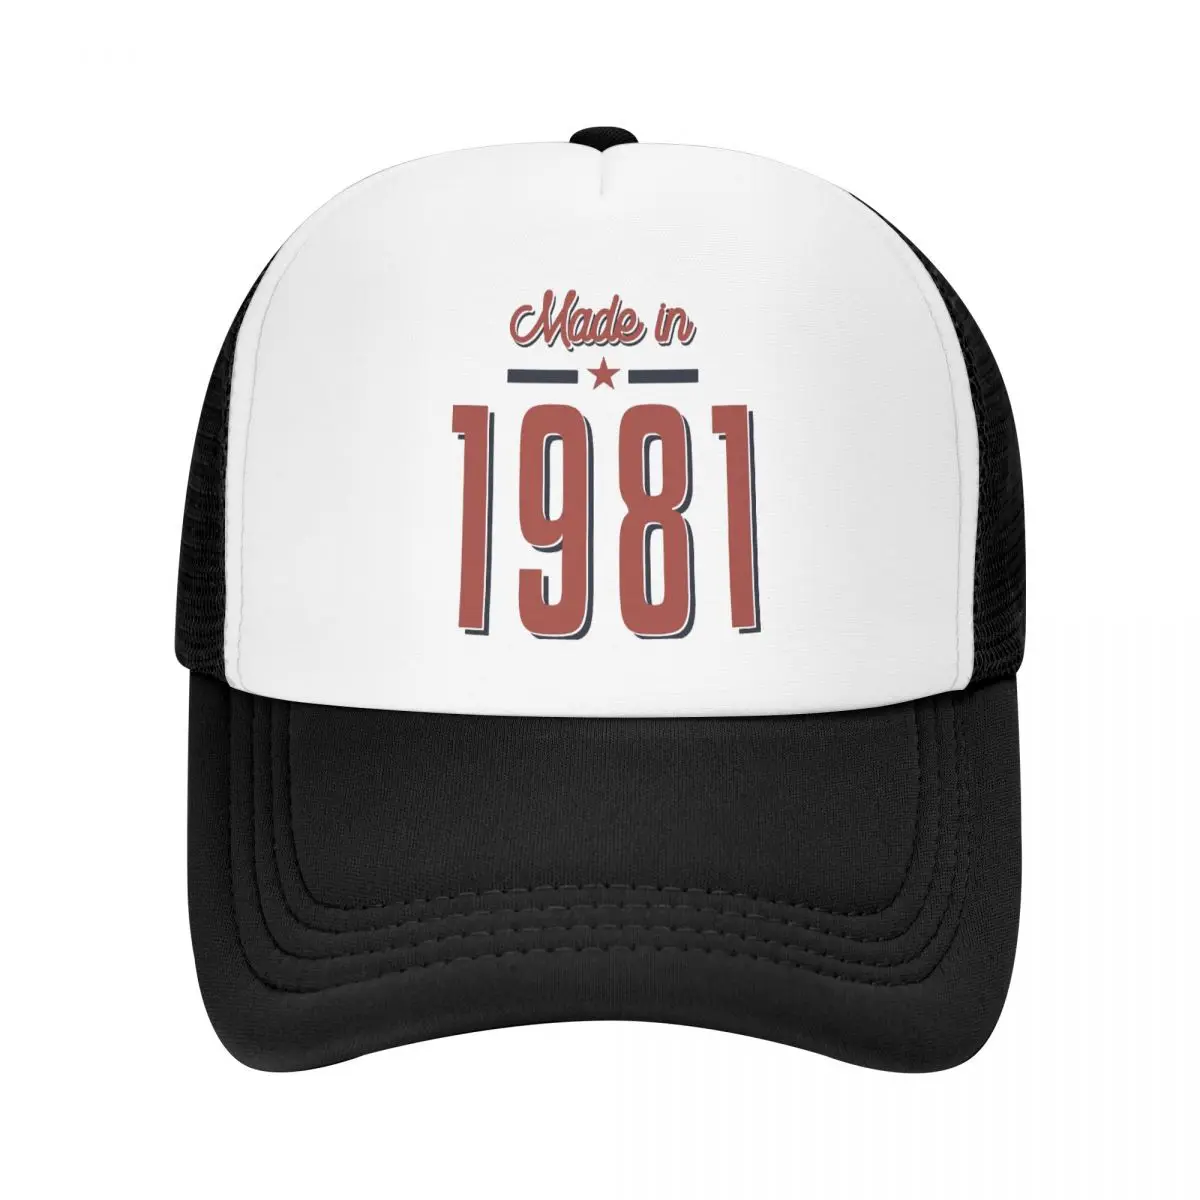 

1981 40th Anniversary Trucker Hats Born In 1981 Mesh Net Baseball Cap Snapback Hip Hop Sadjustable Peaked Hat For Men Women